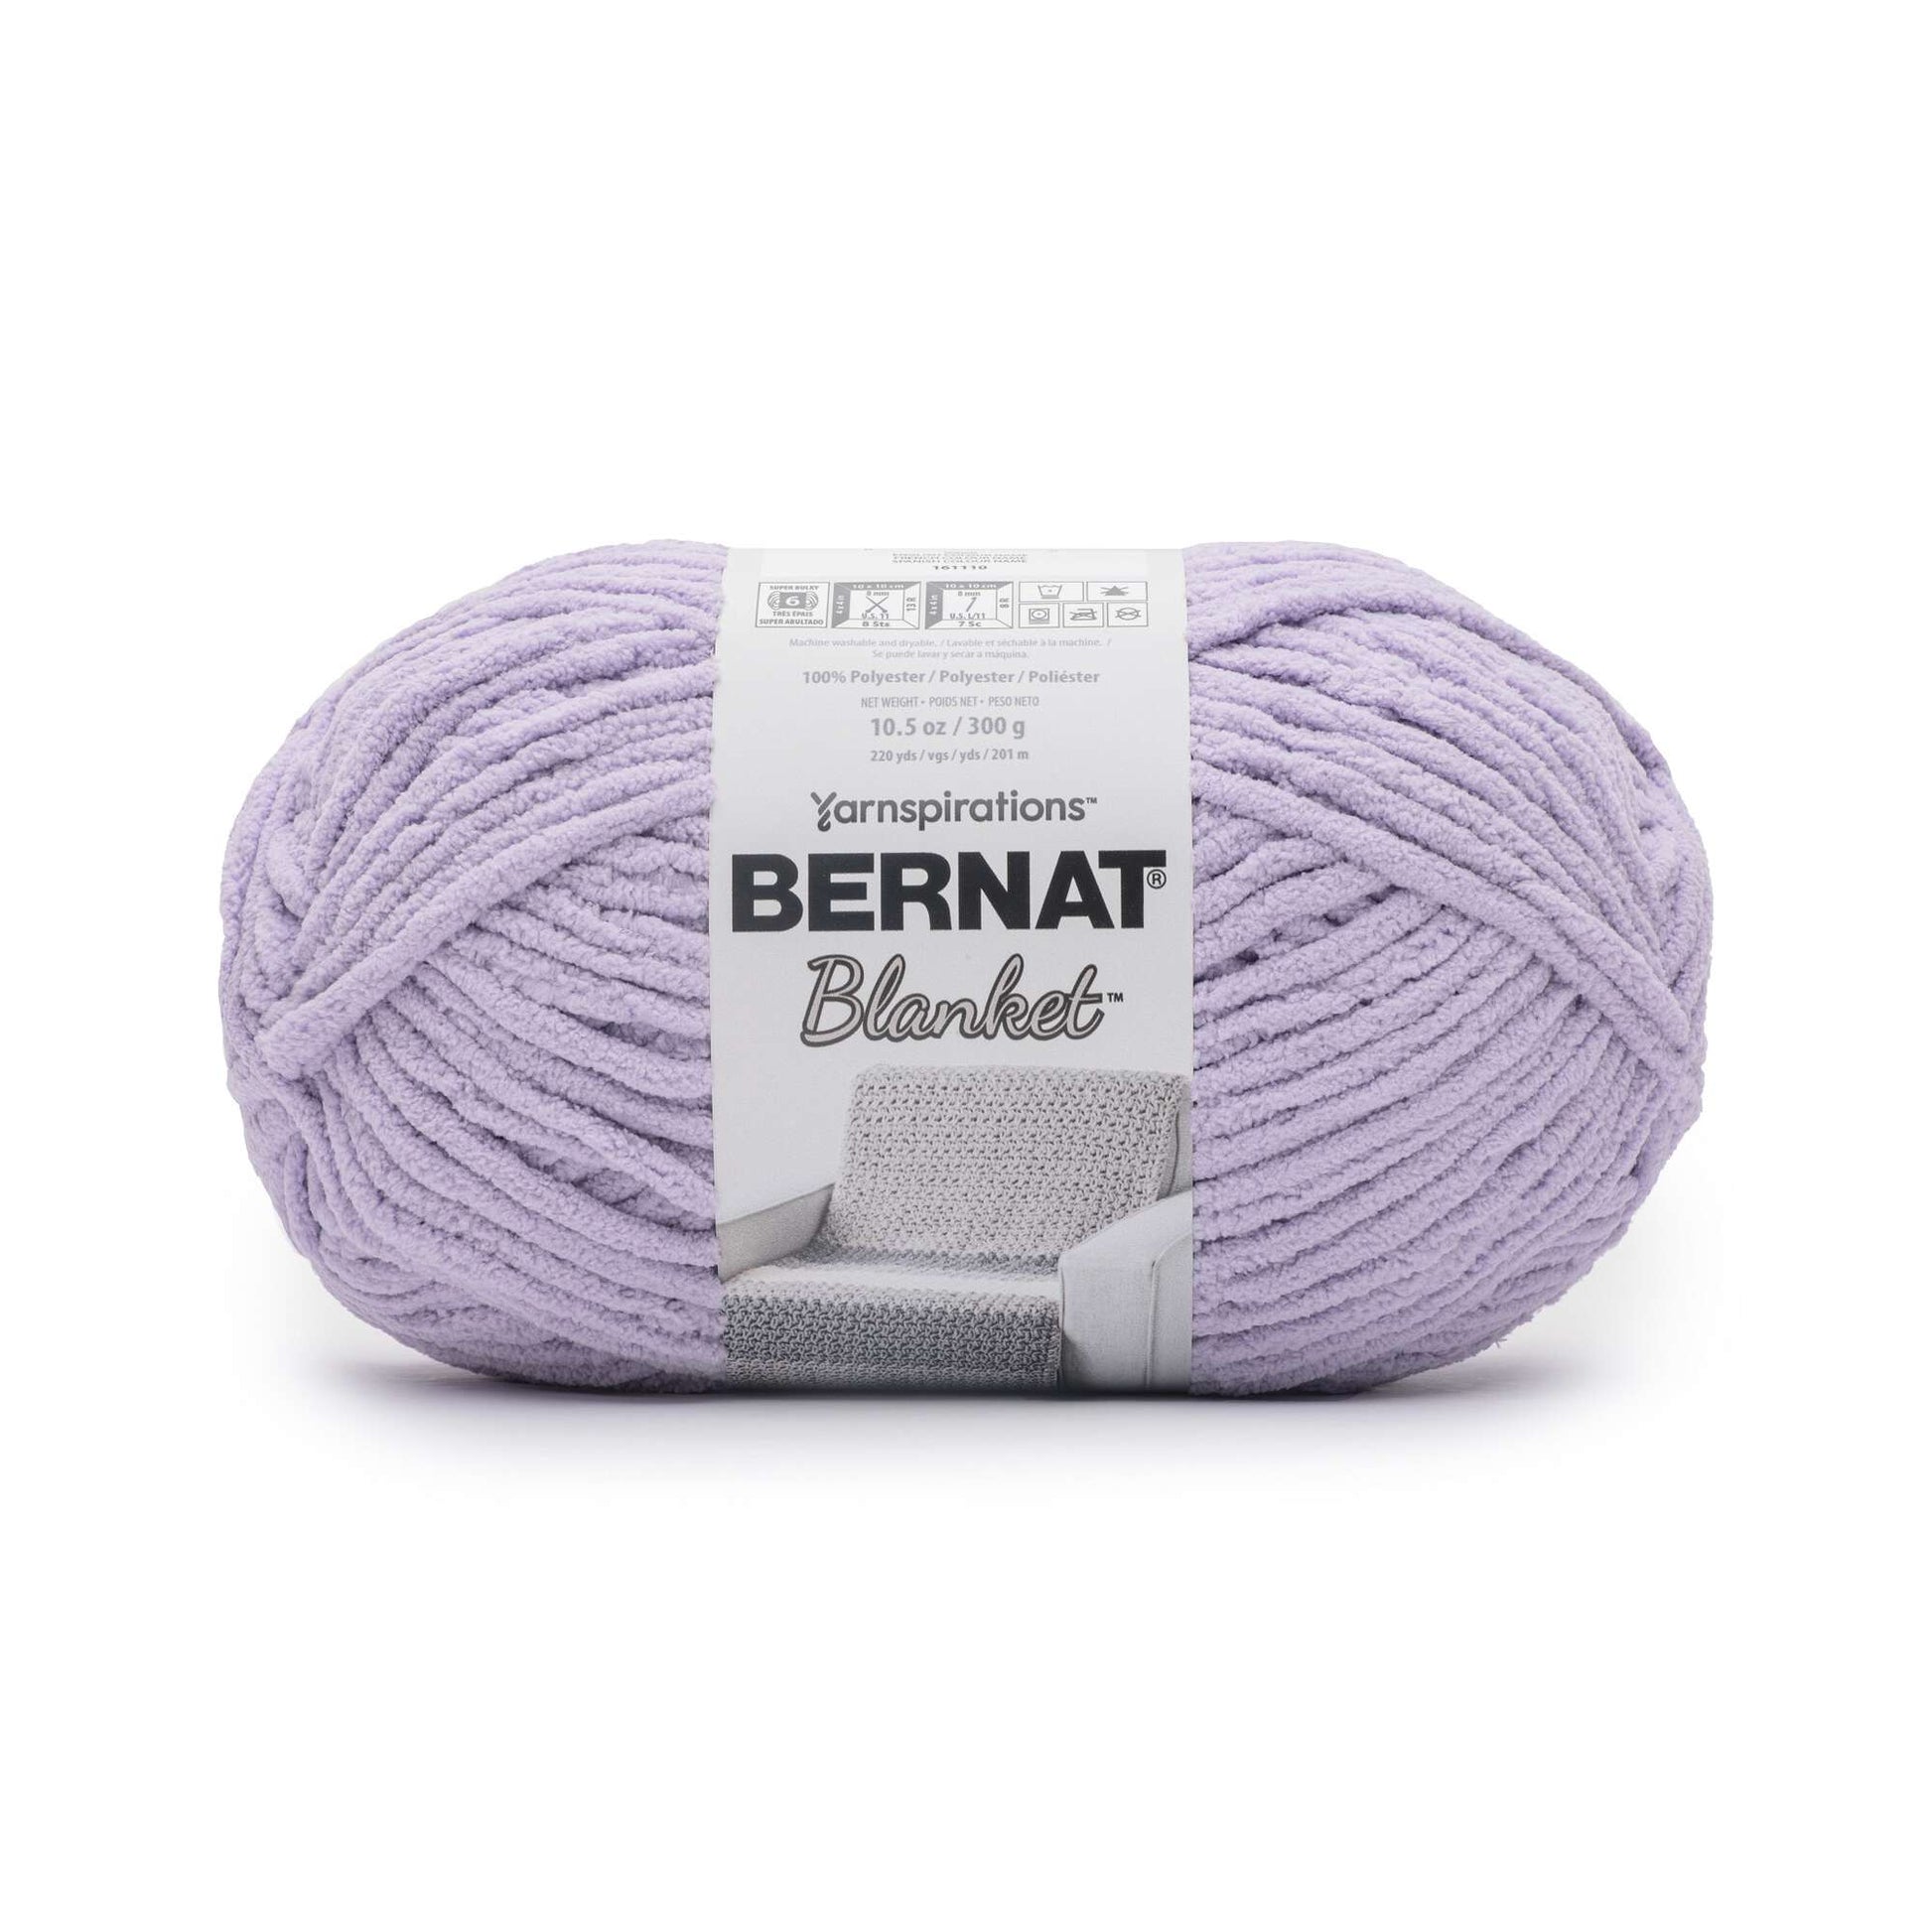 Bernat Blanket Yarn 12pk by Bernat